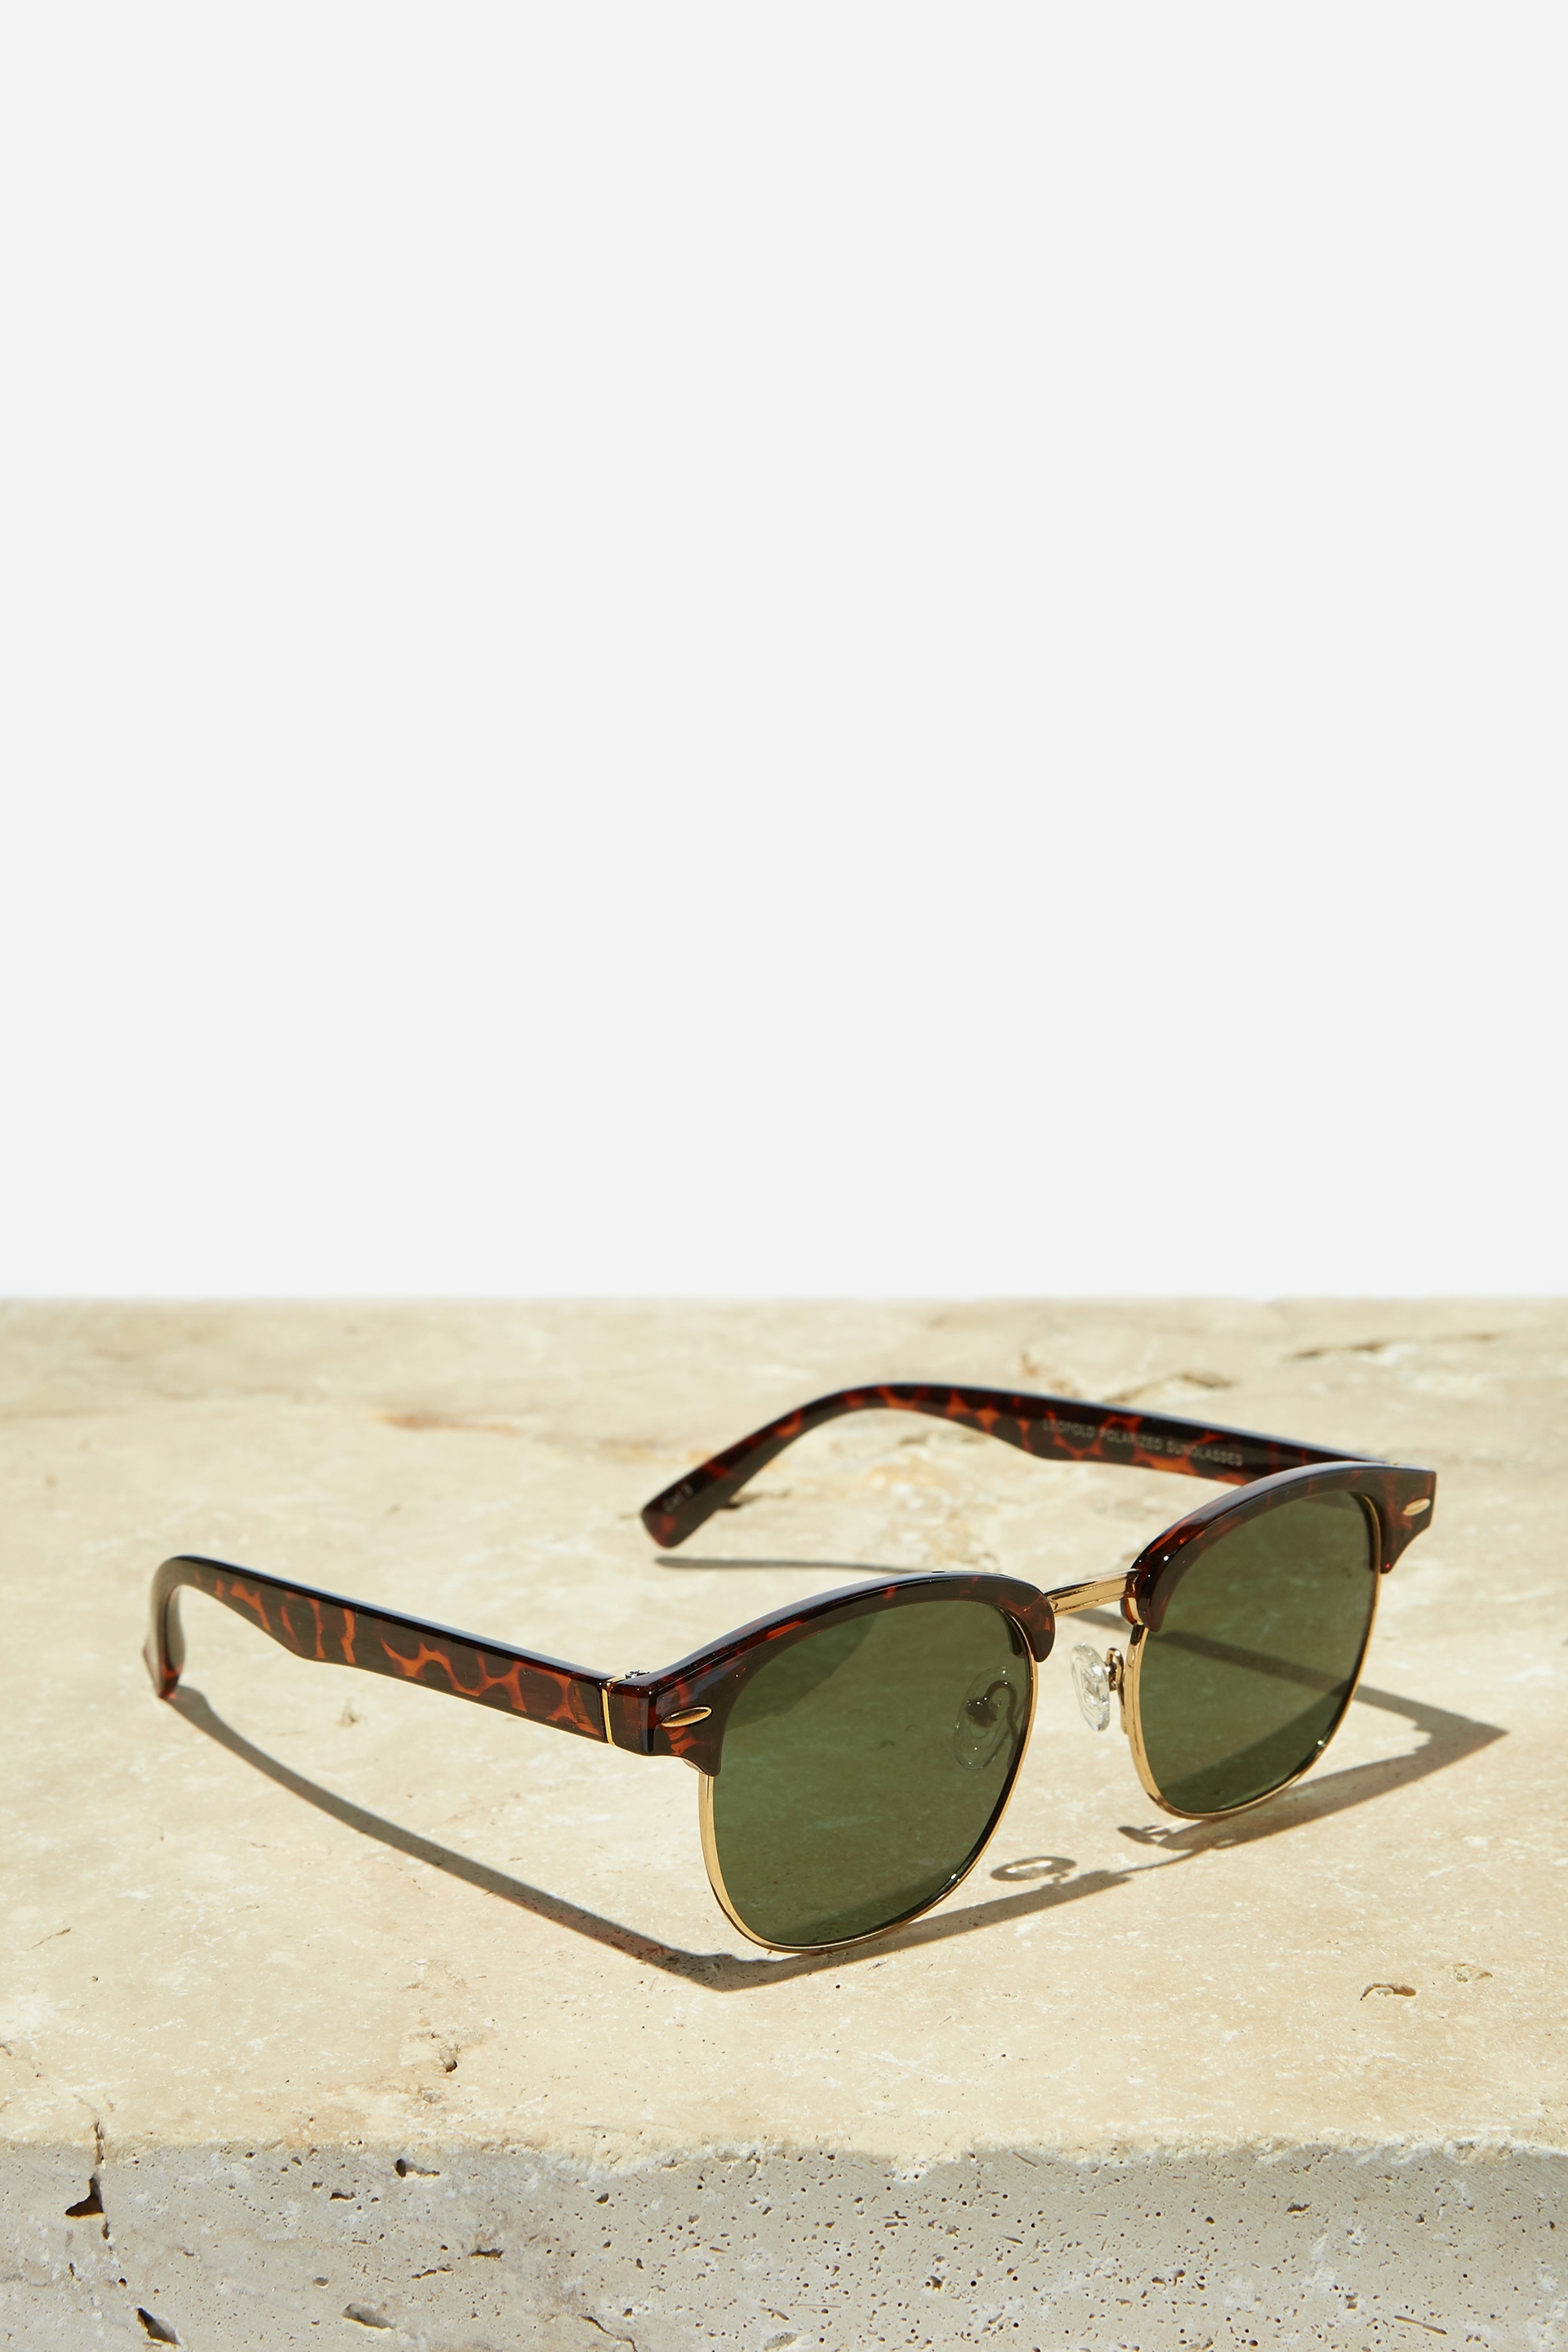 Leopold Sunglasses